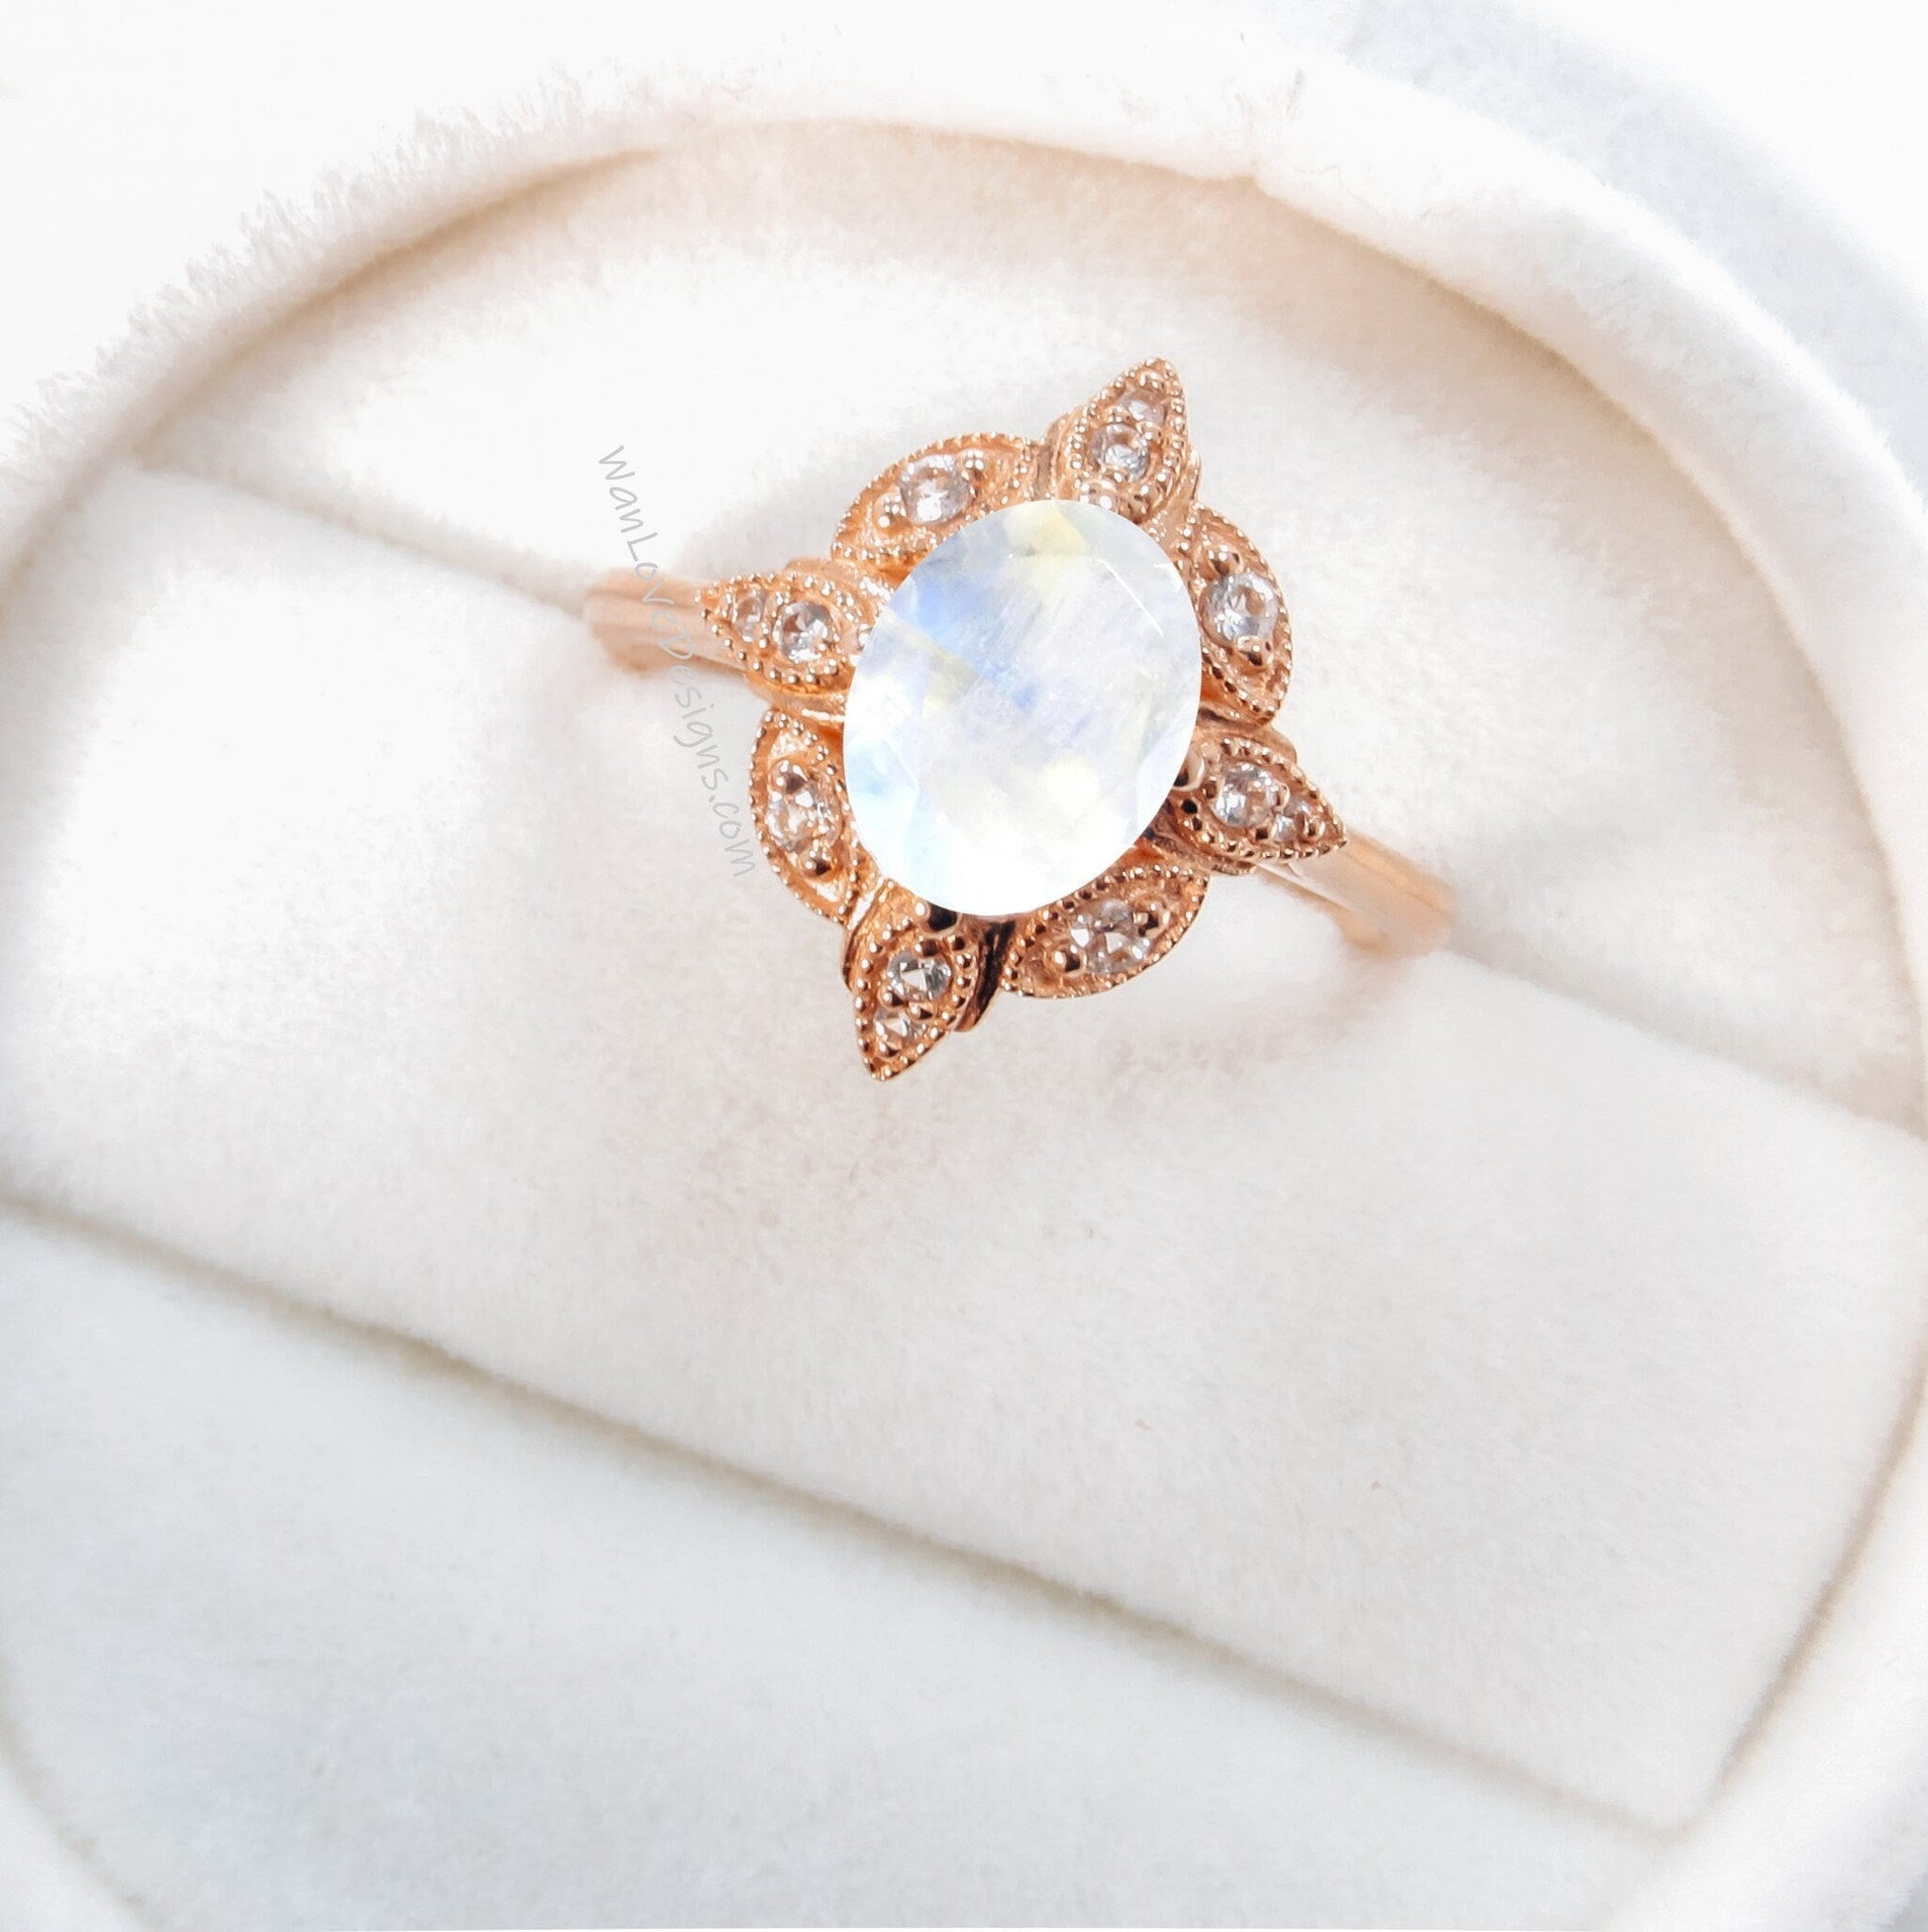 Moonstone Diamond Oval Milgrain Halo Engagement Ring, plain shank, 14k White Yellow Rose Gold,Platinum,Custom,Wedding, WanLoveDesigns Wan Love Designs